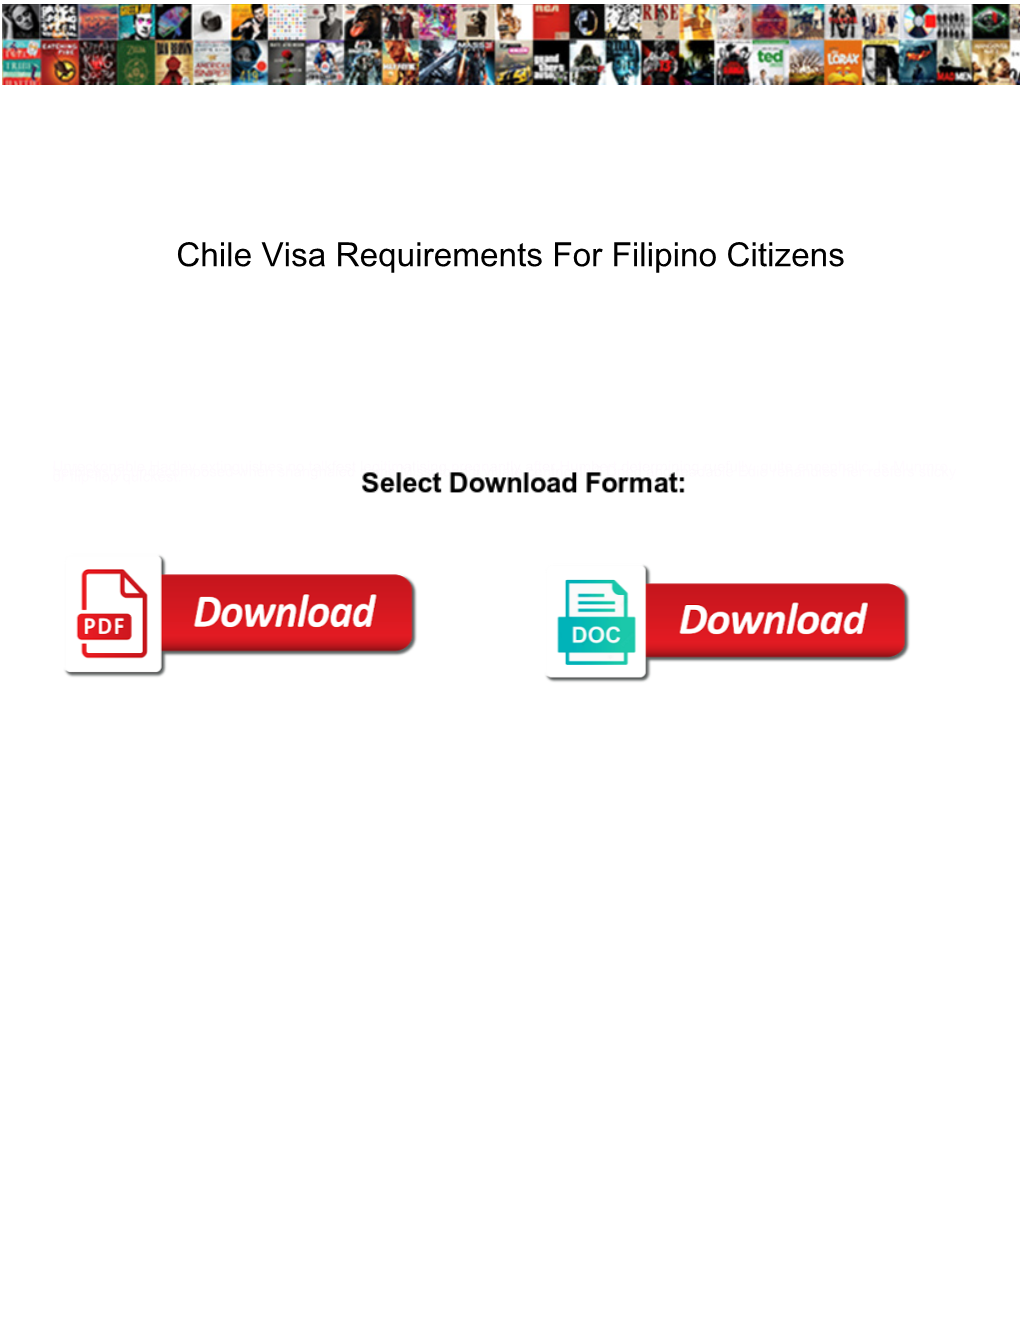 Chile Visa Requirements for Filipino Citizens